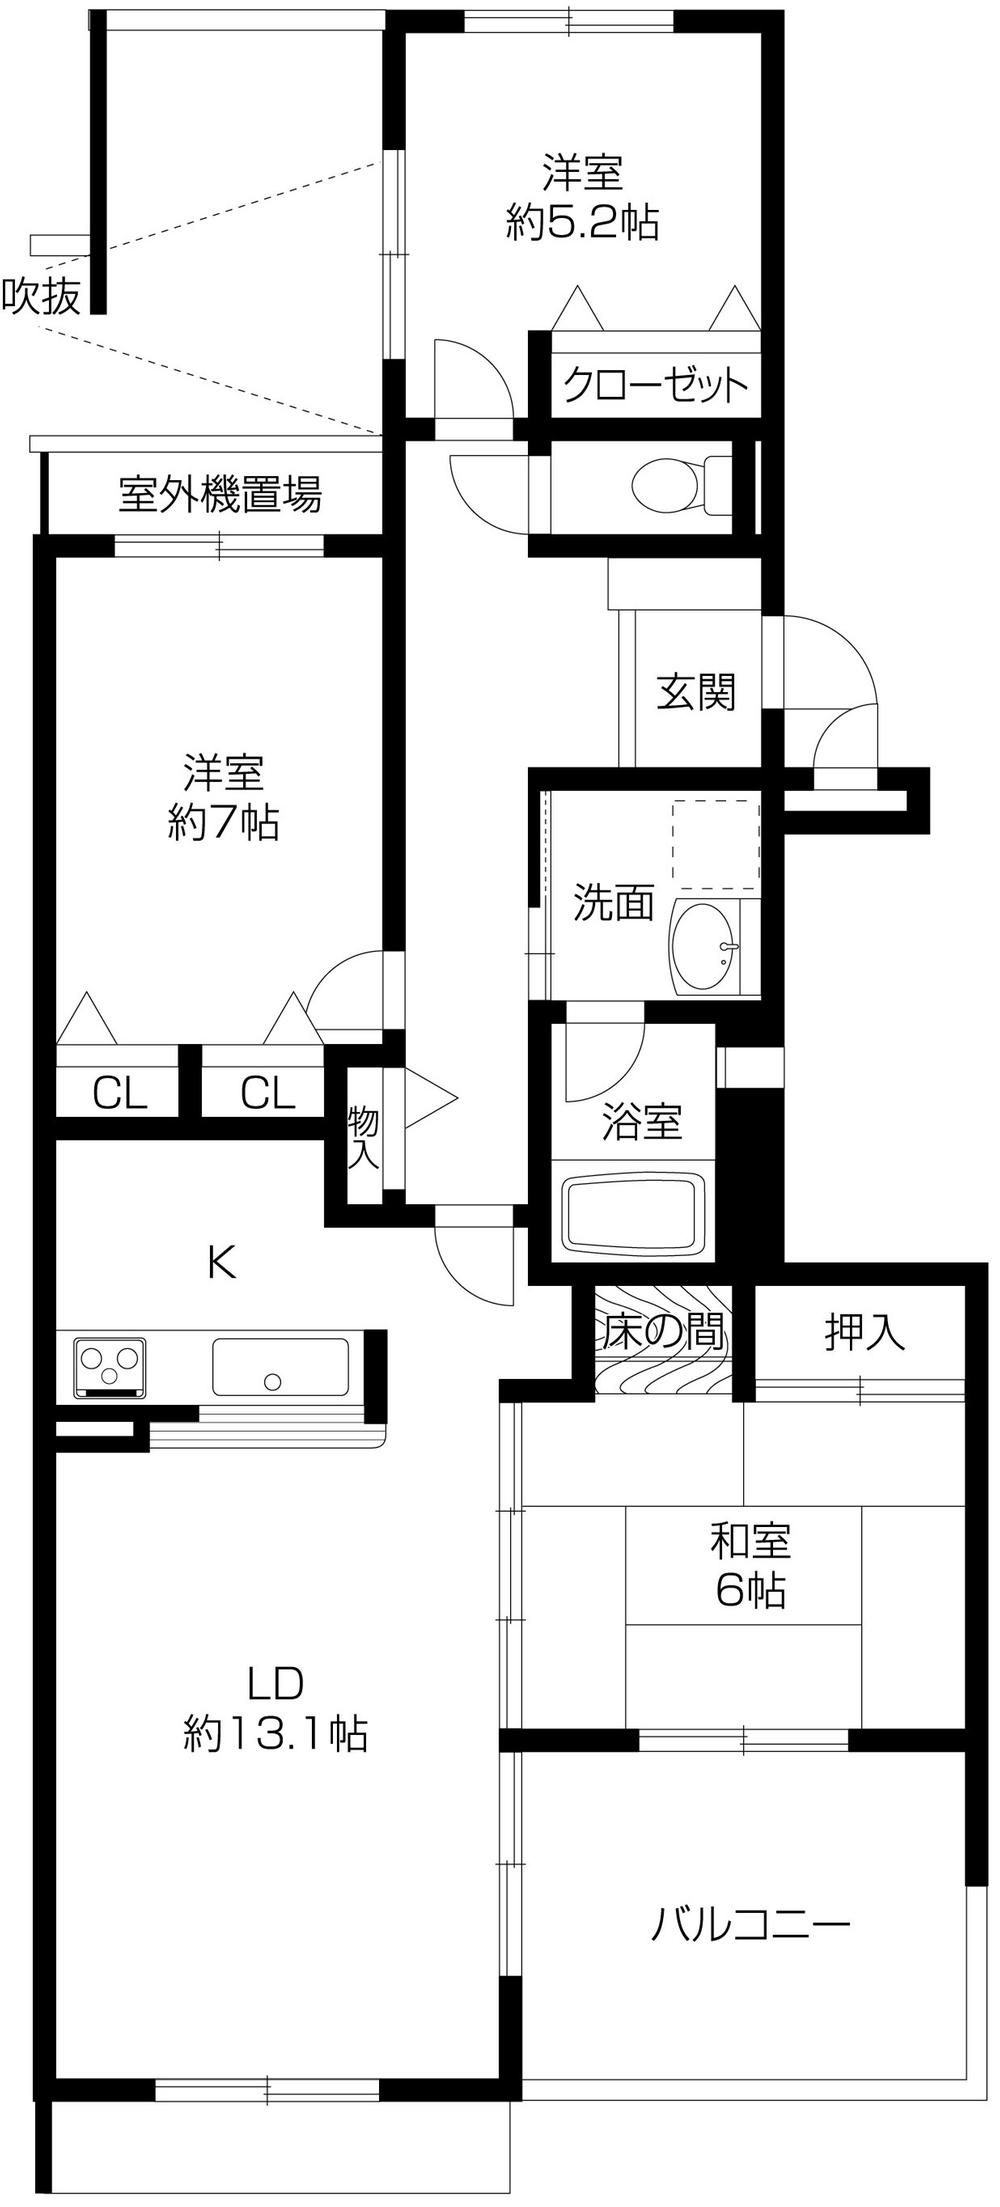 Floor plan. 3LDK, Price 18.3 million yen, Occupied area 82.46 sq m , Balcony area 9.72 sq m